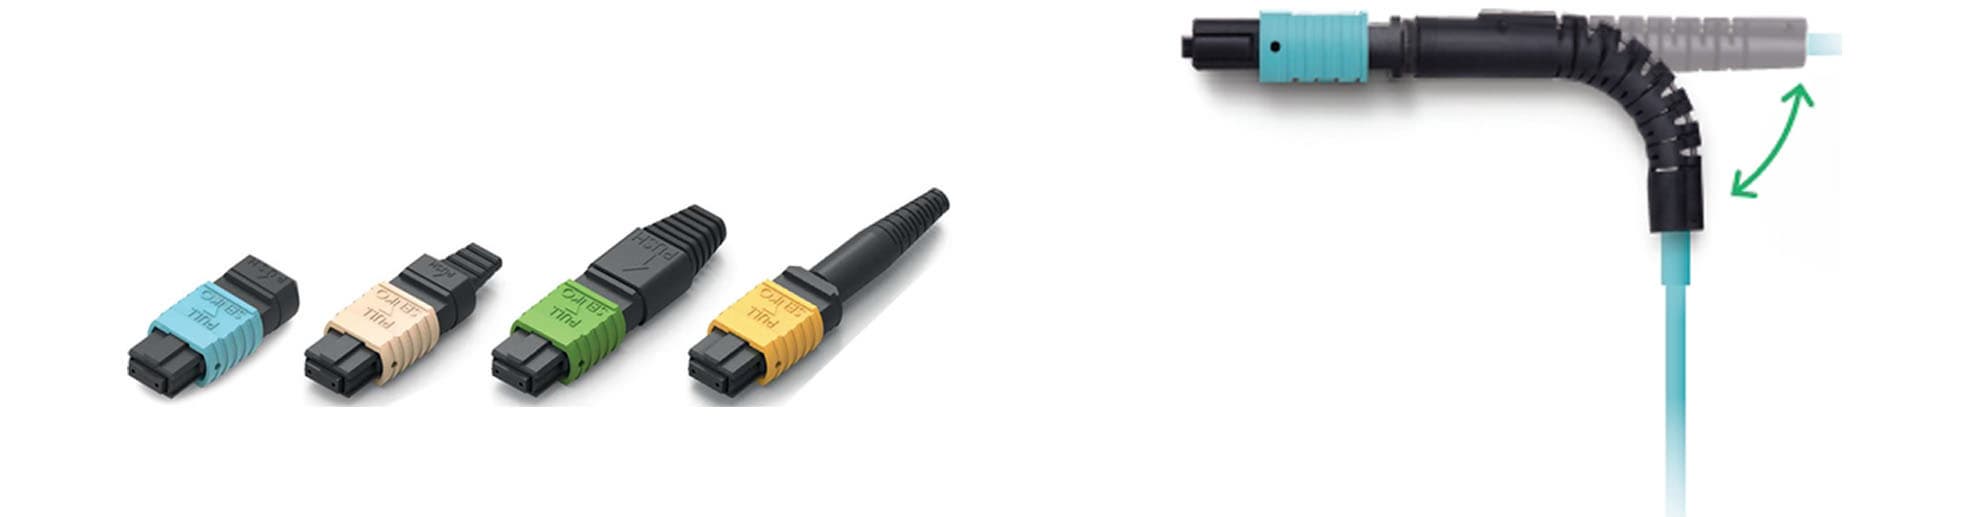 optical fiber mpo connector